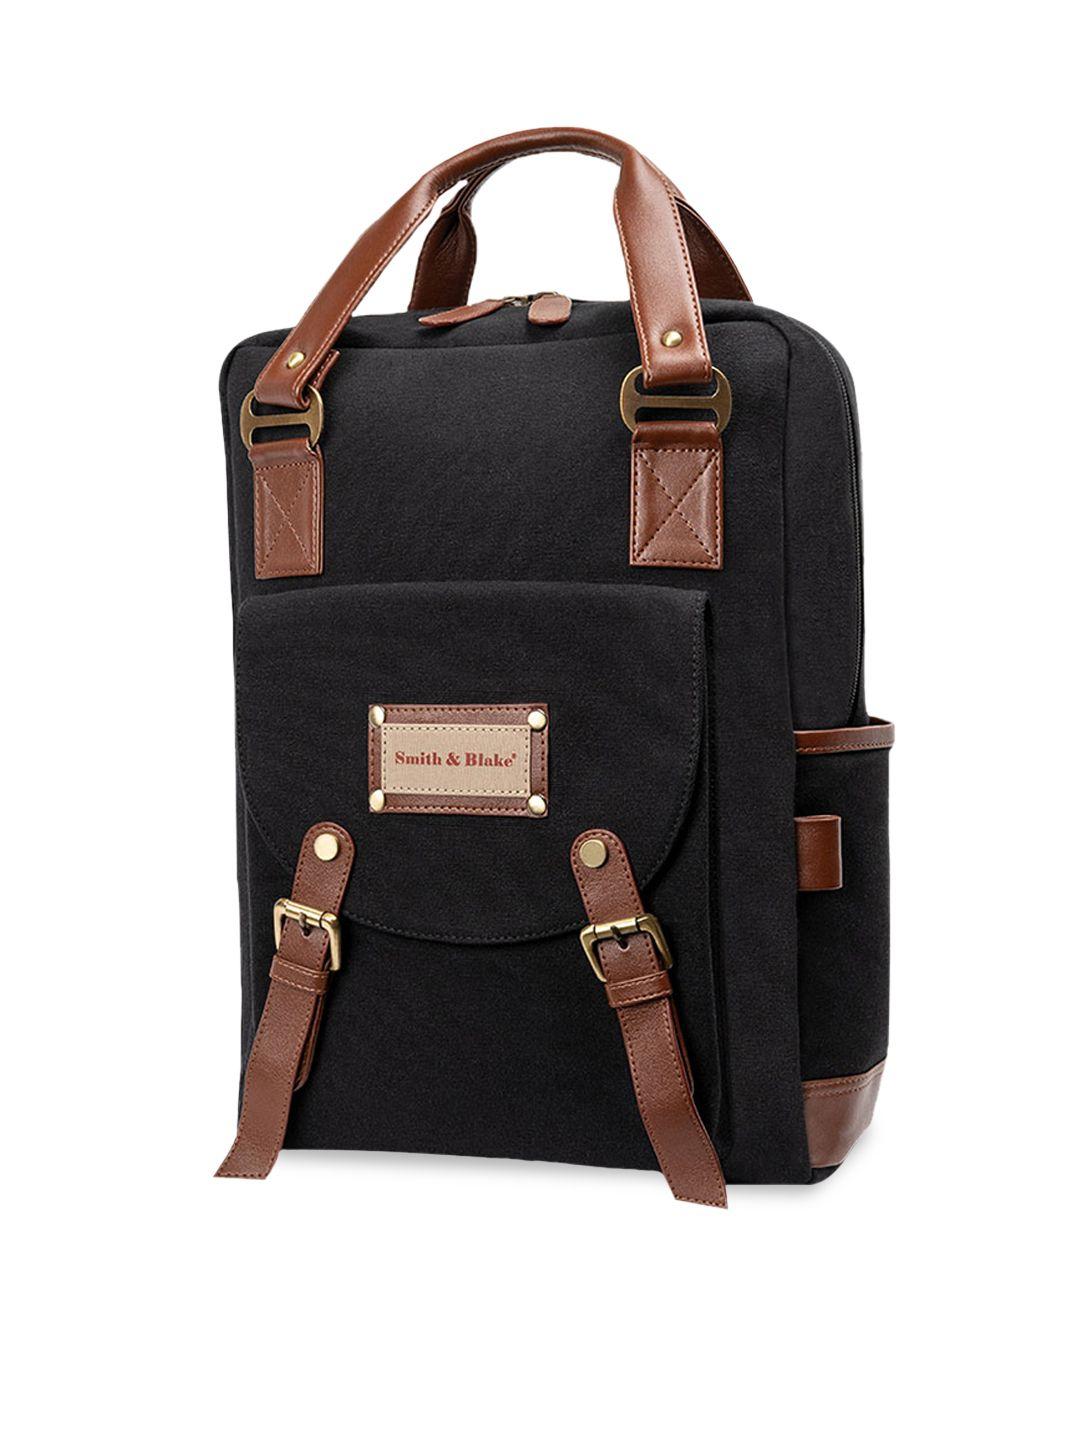 smith & blake unisex black & brown backpack